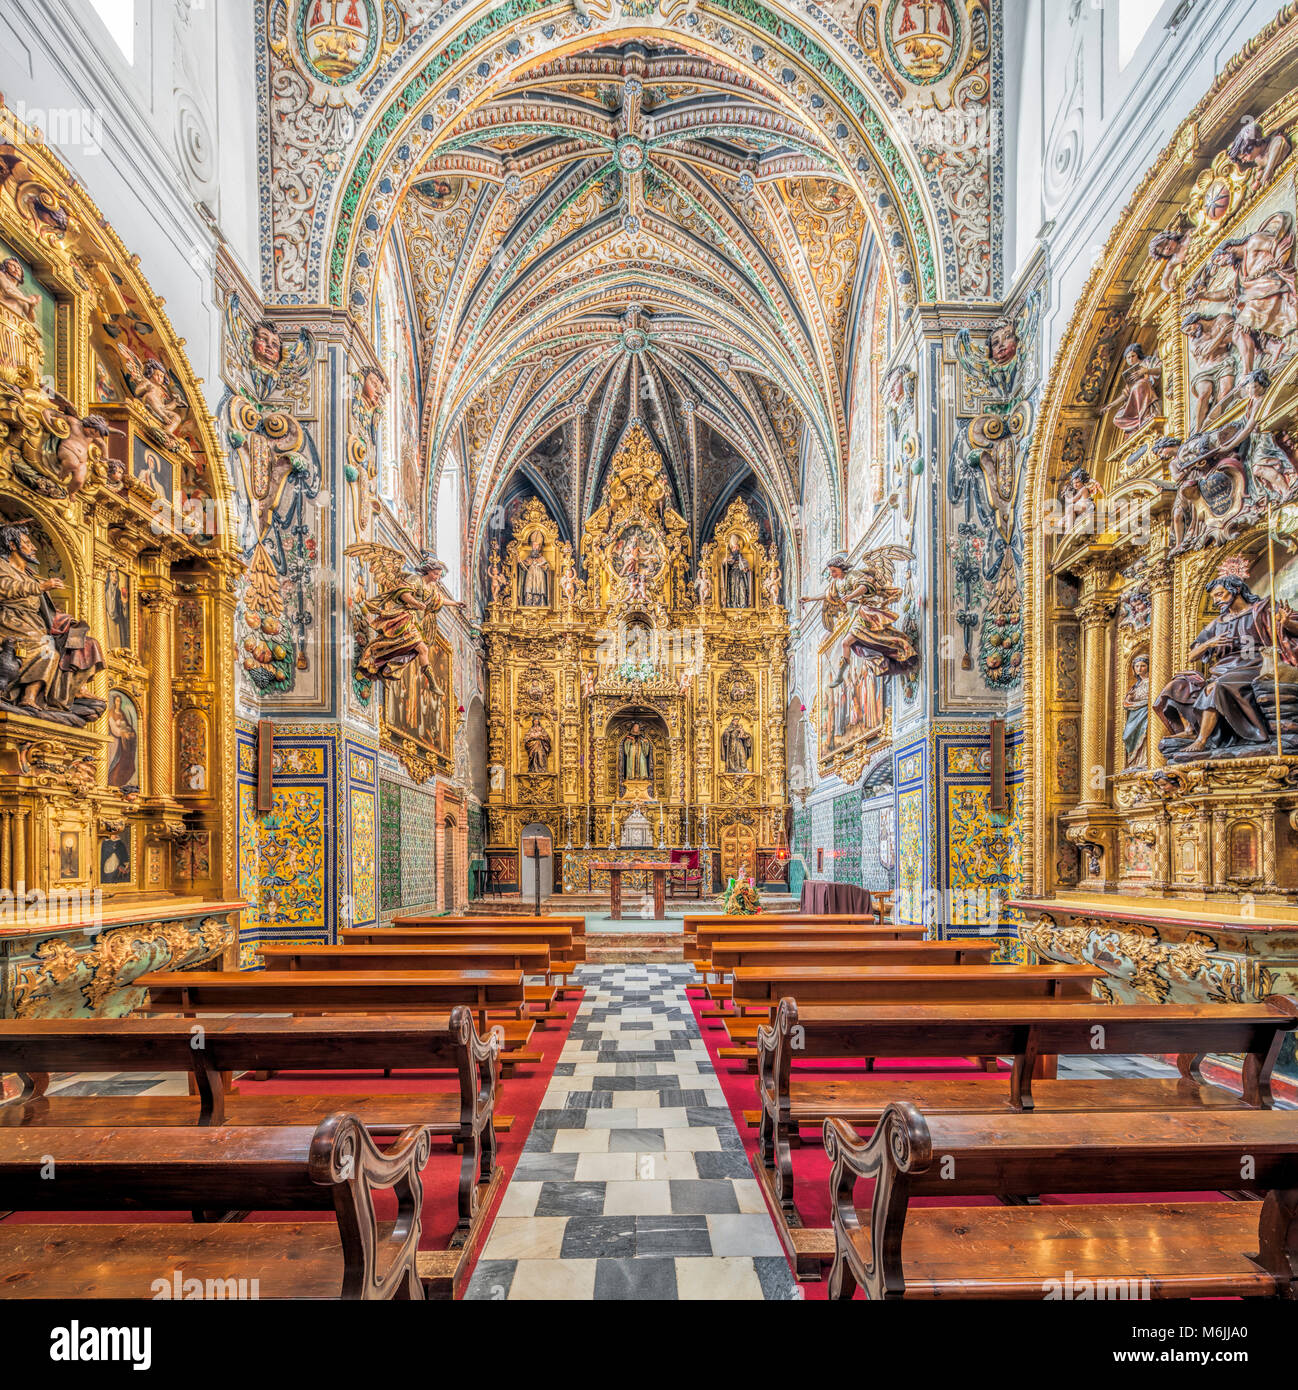 Kirche von Santa Paula Kloster, Sevilla, Spanien. Hohe Auflösung Platz Panorama. Stockfoto